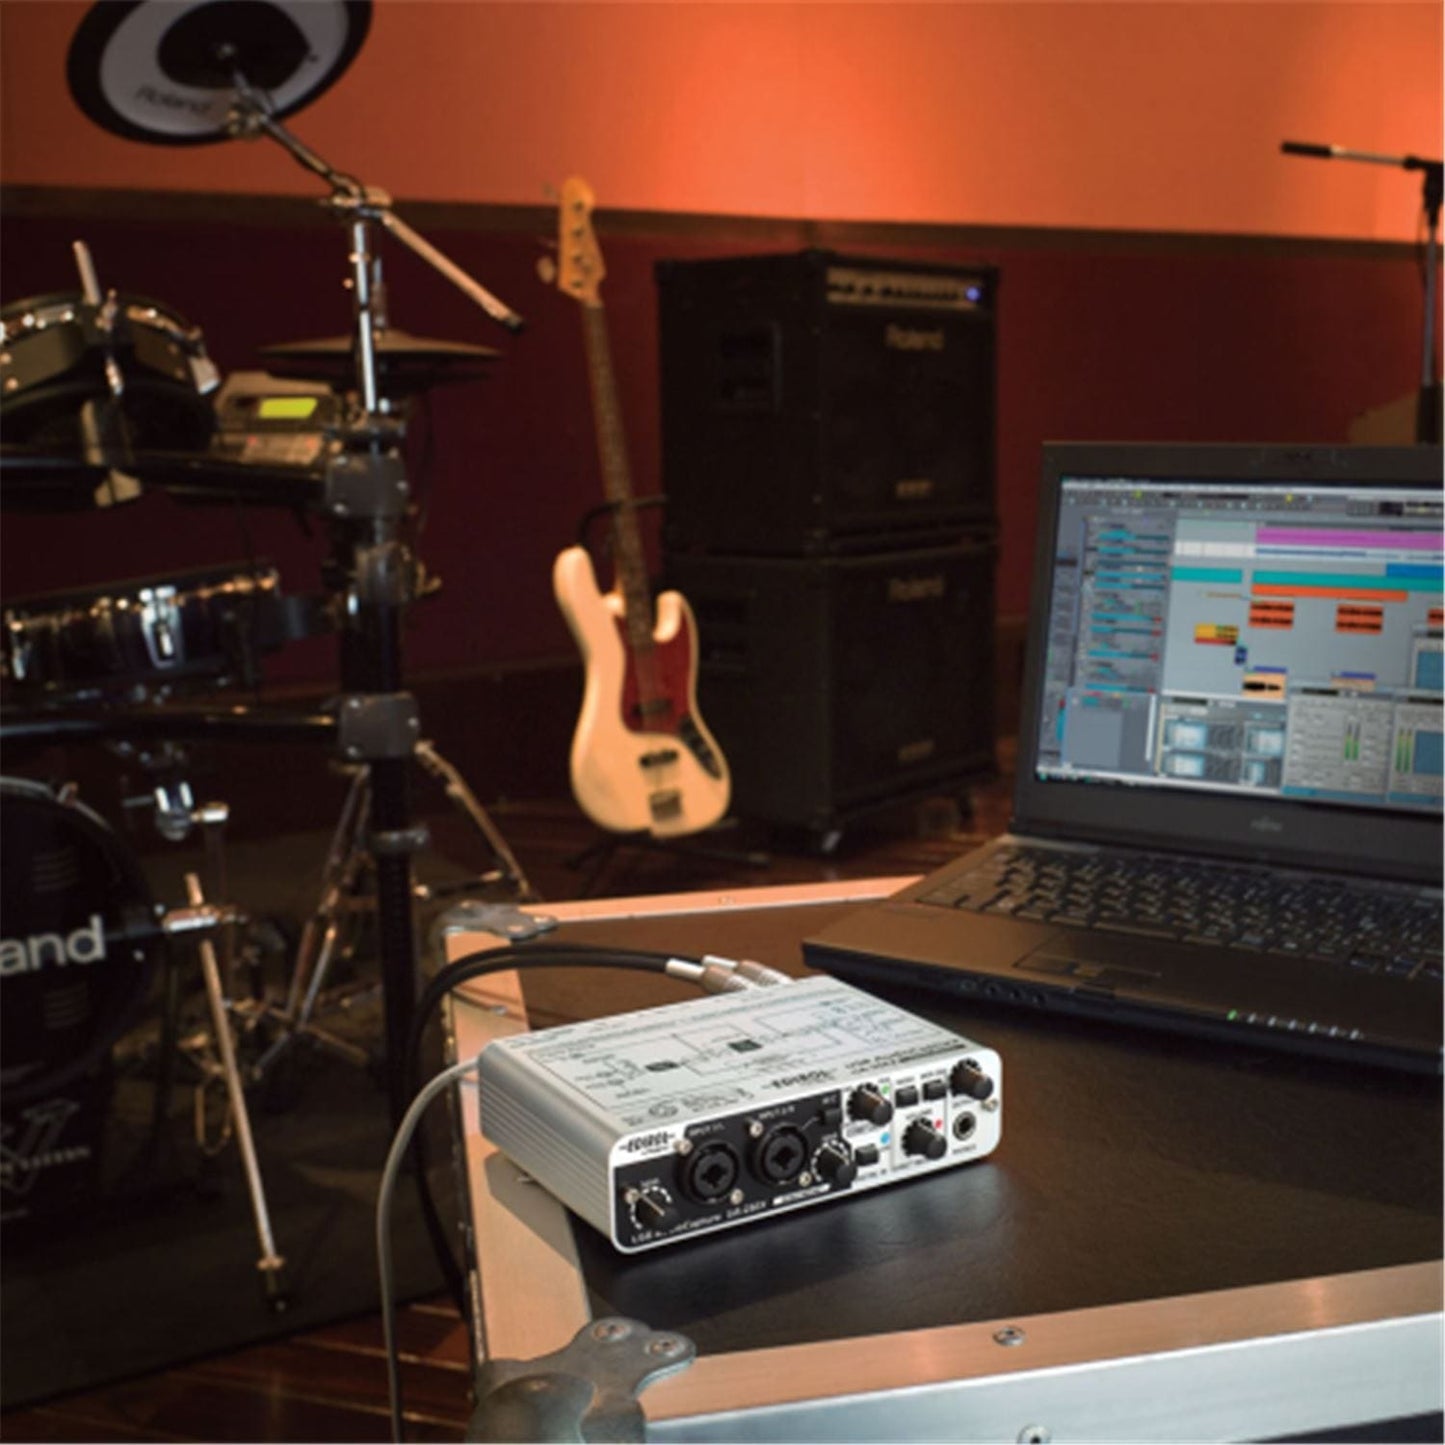 Edirol UA-25-EX USB Audio and Midi Interface - PSSL ProSound and Stage Lighting